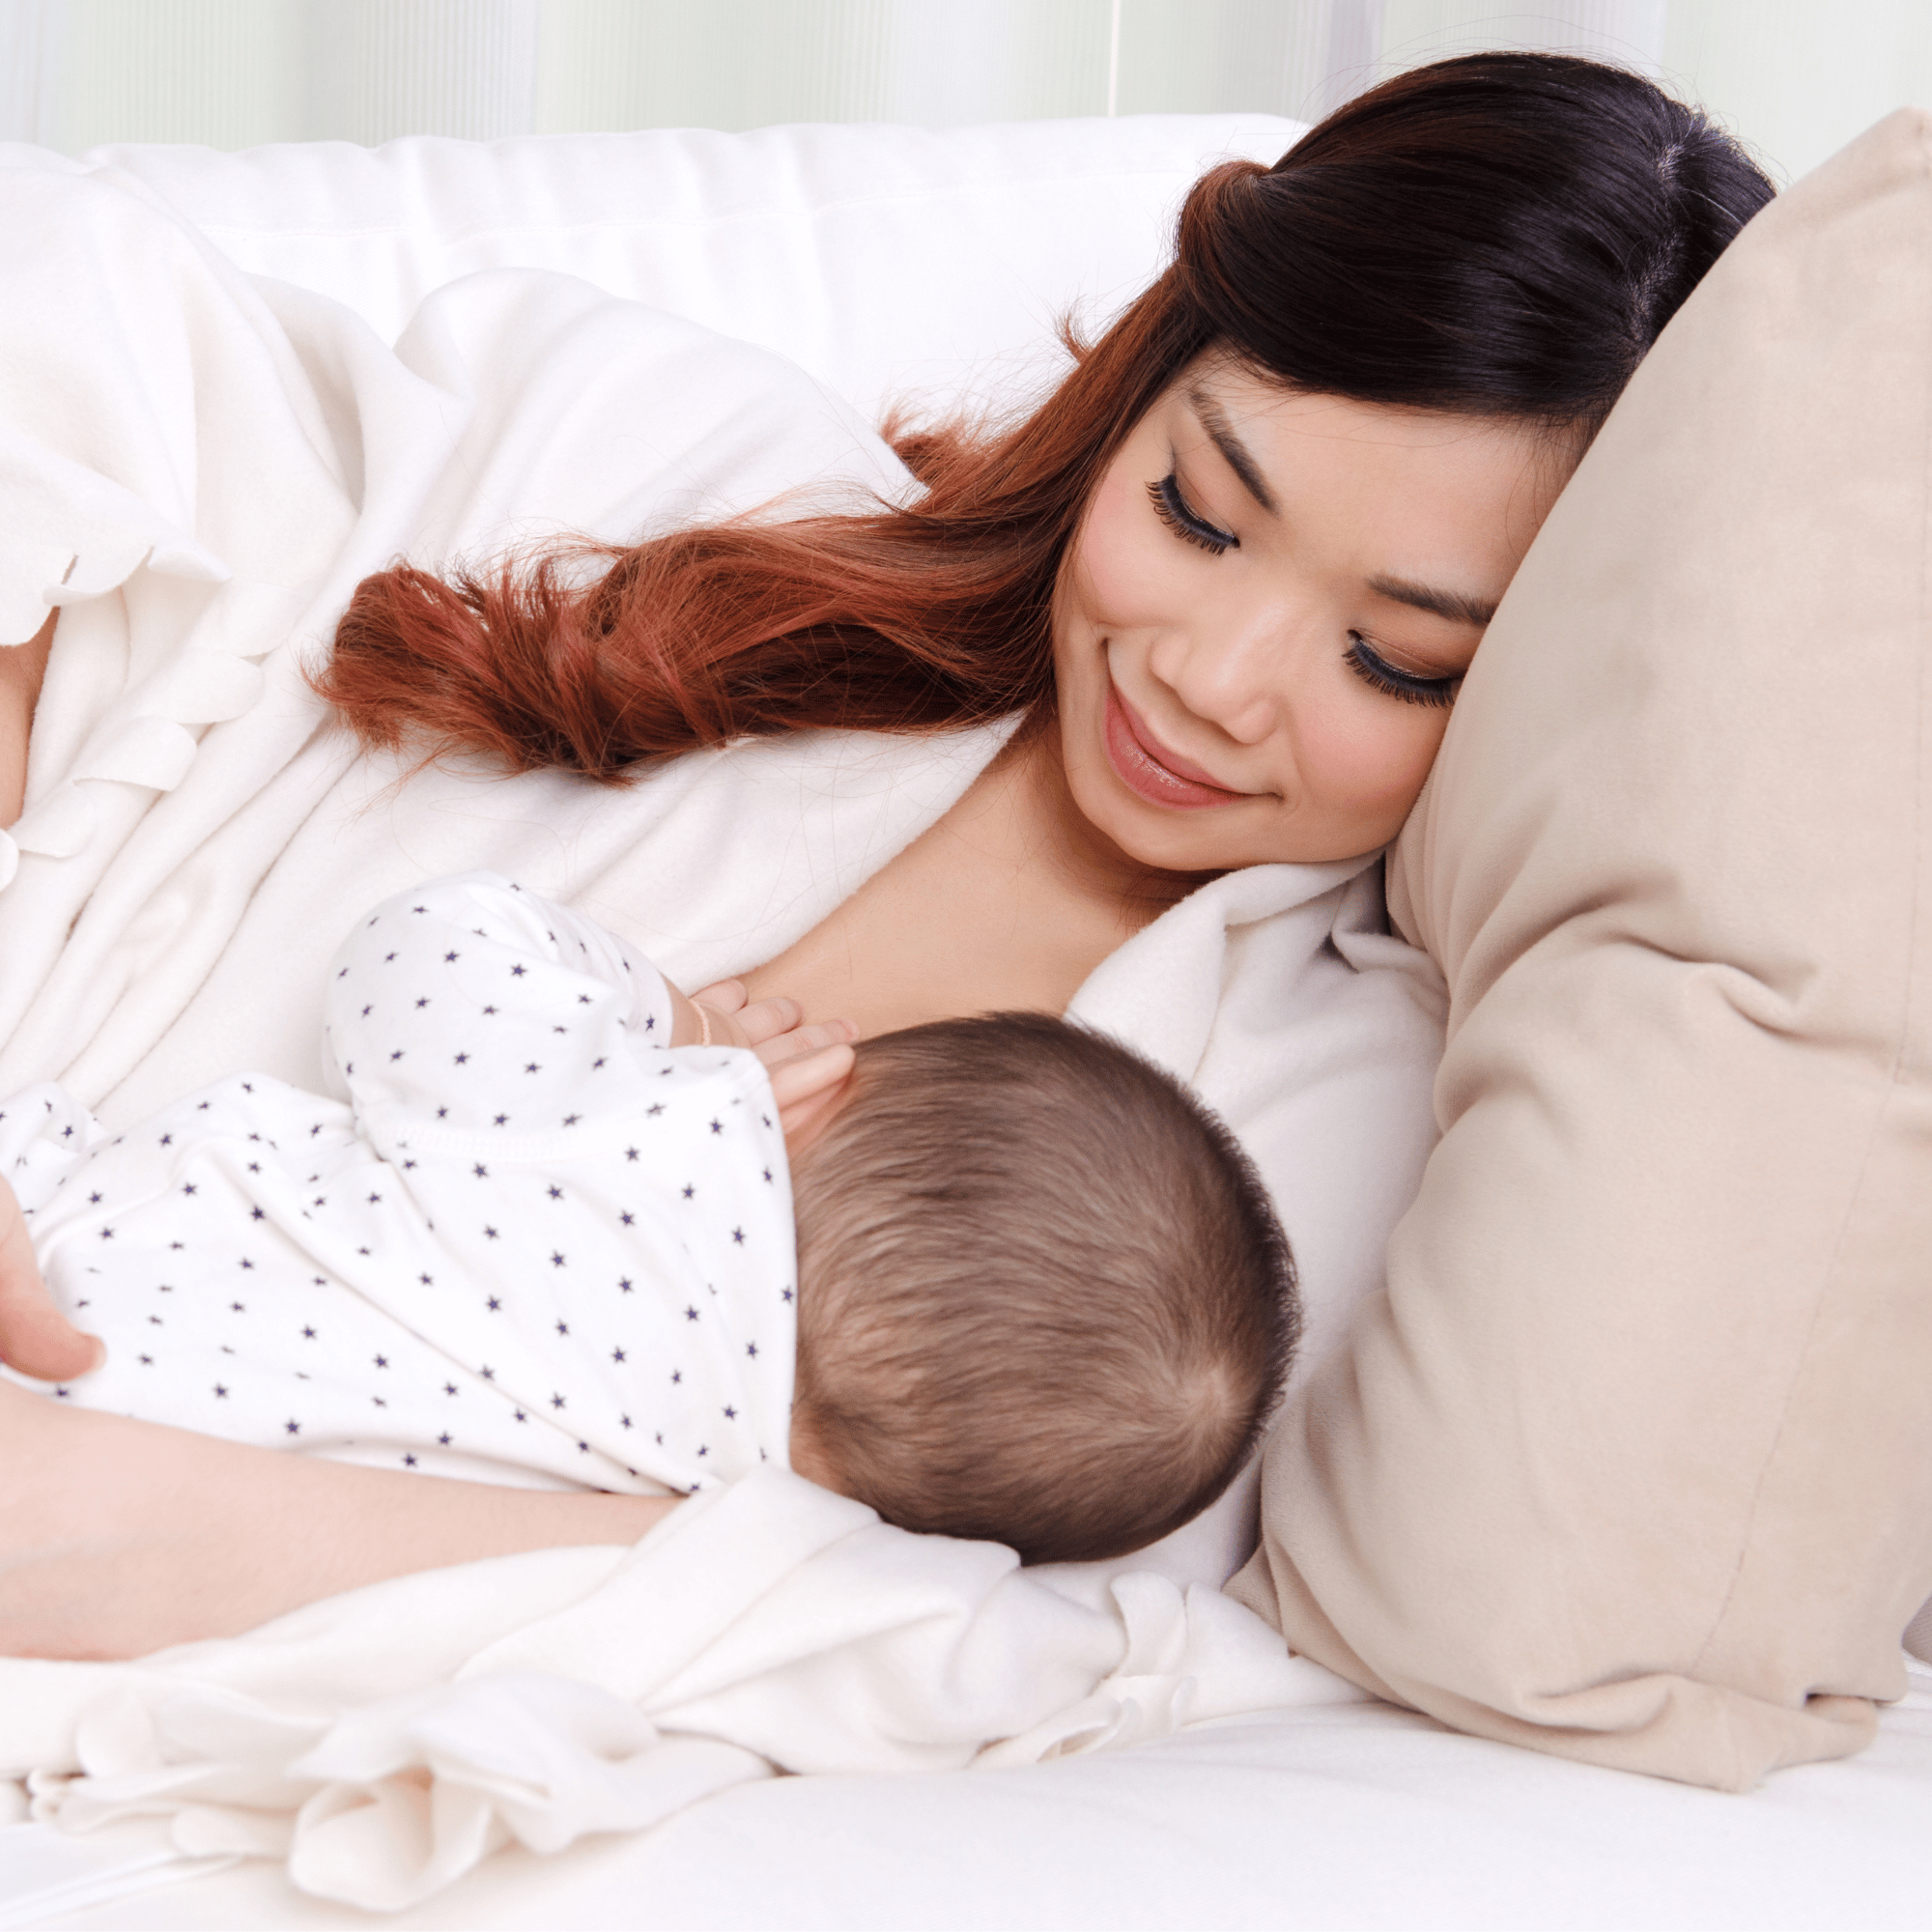 breastfeeding baby, nursing baby and mother